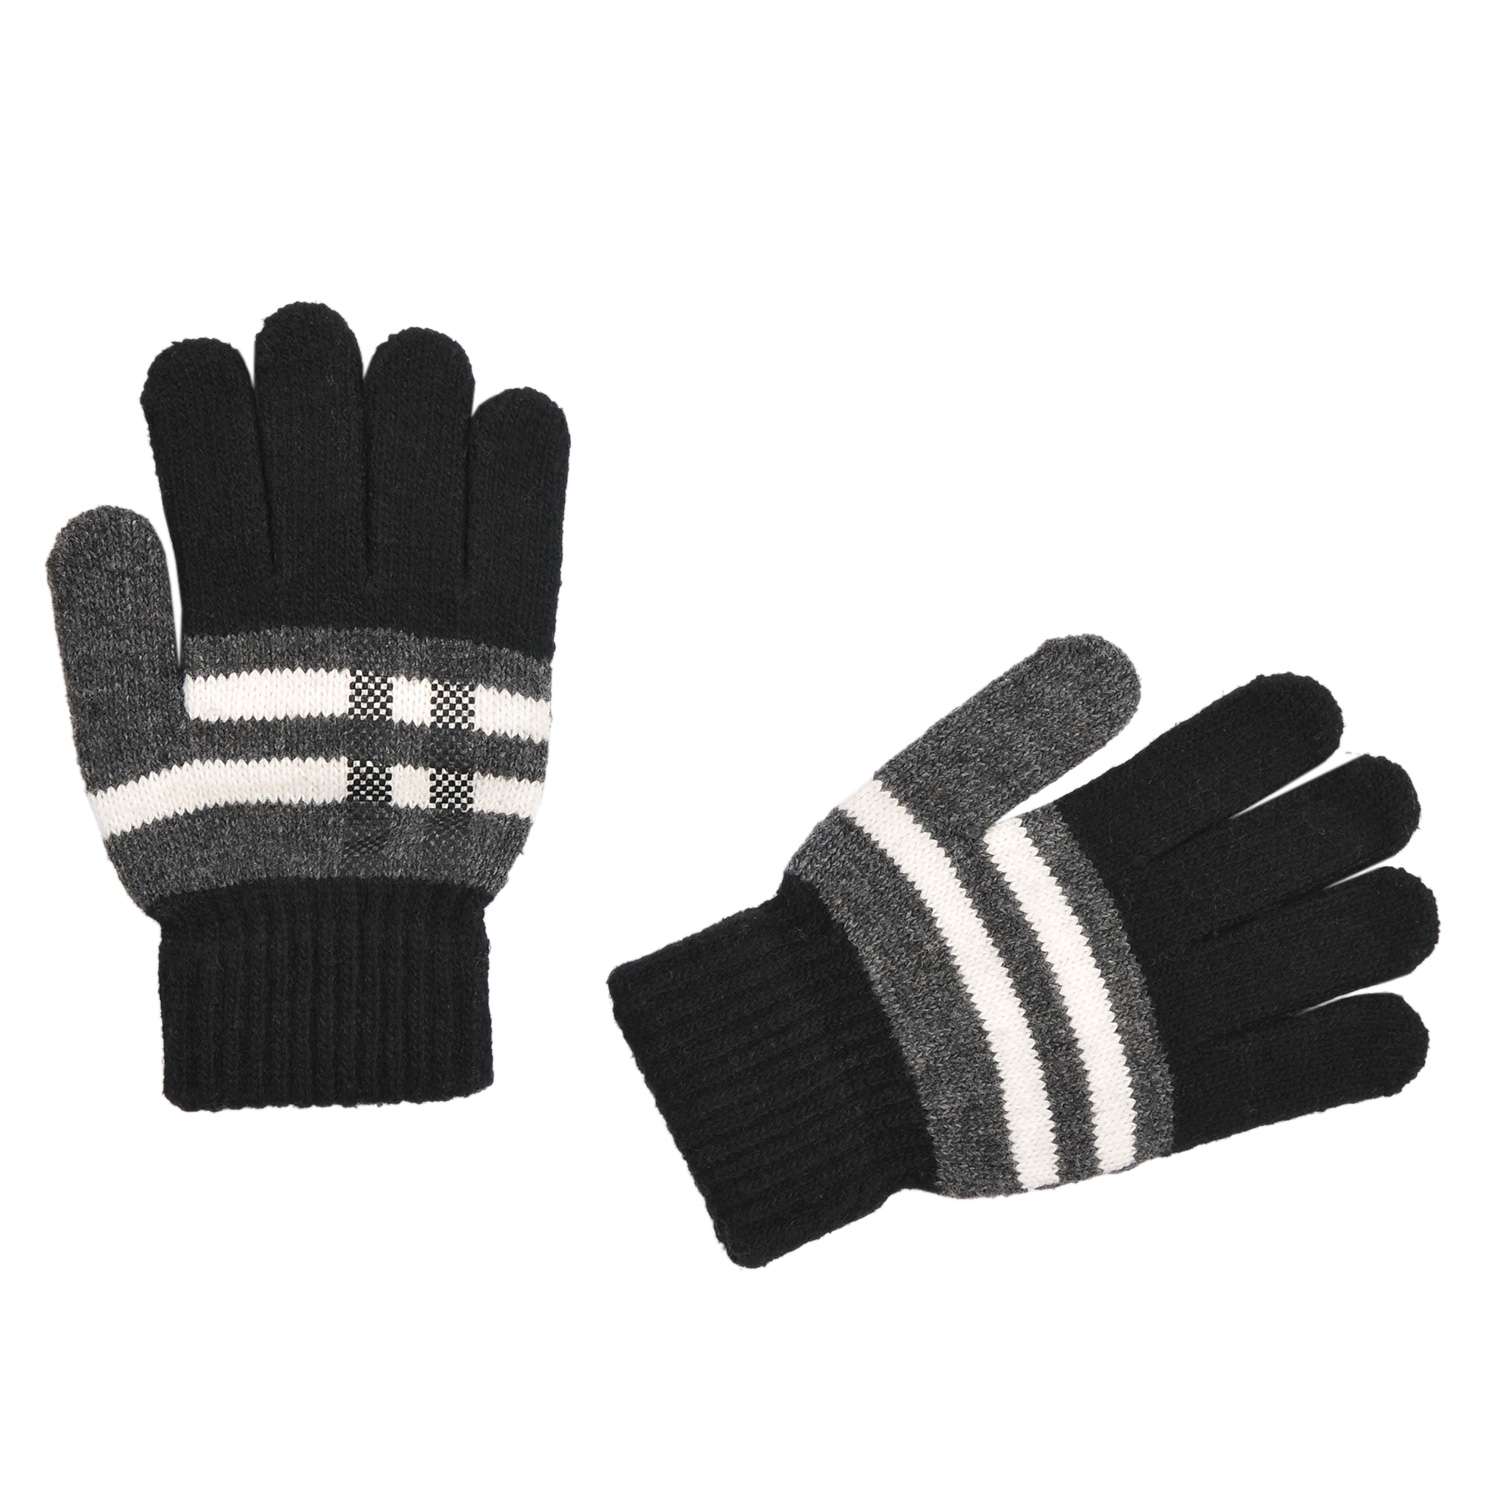 Перчатки S.gloves S 2125-L черный - фото 2